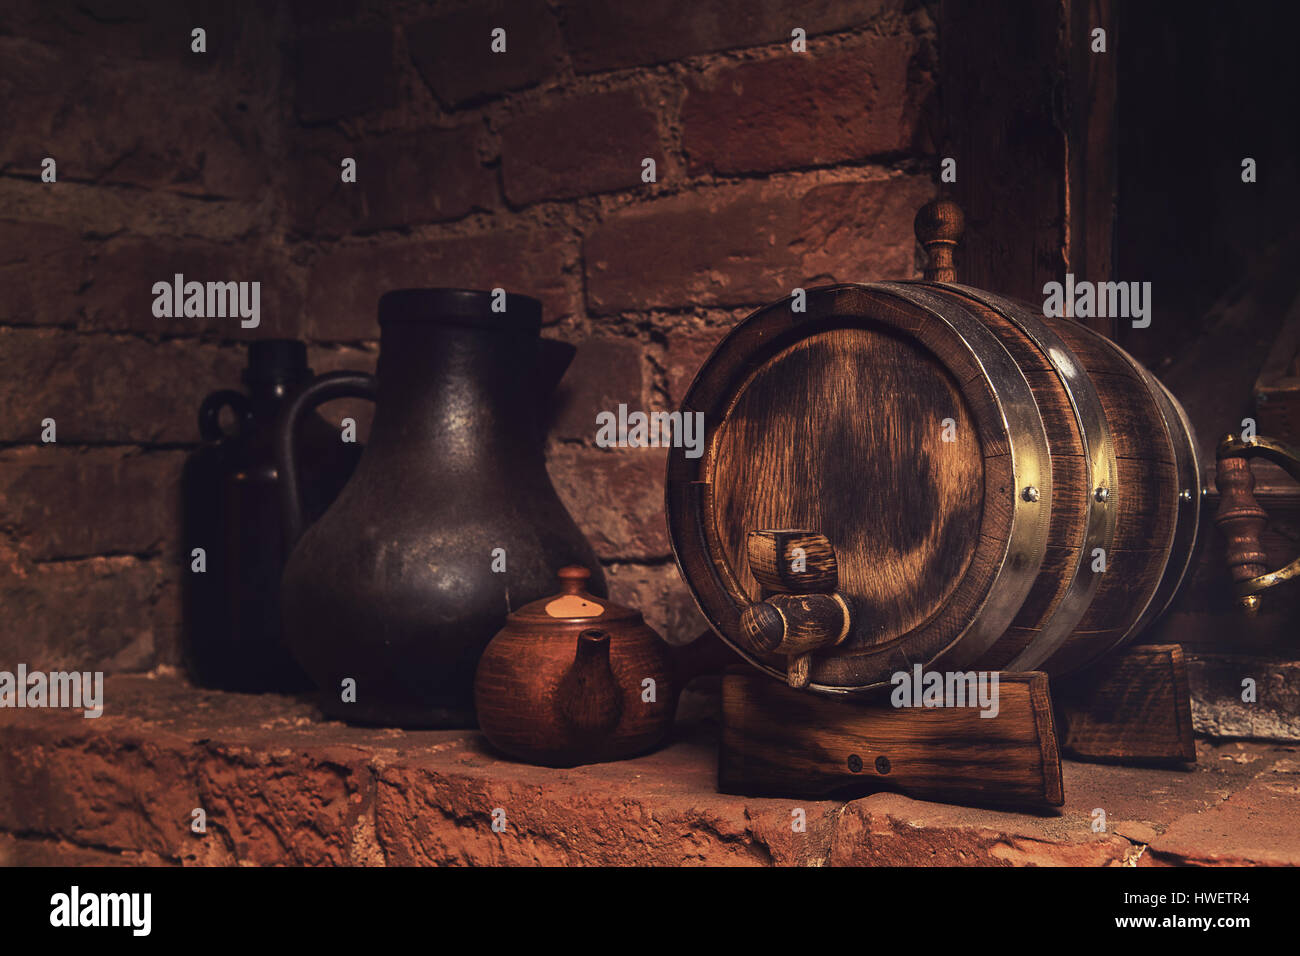 barrels in the wine cellar Stock Photo